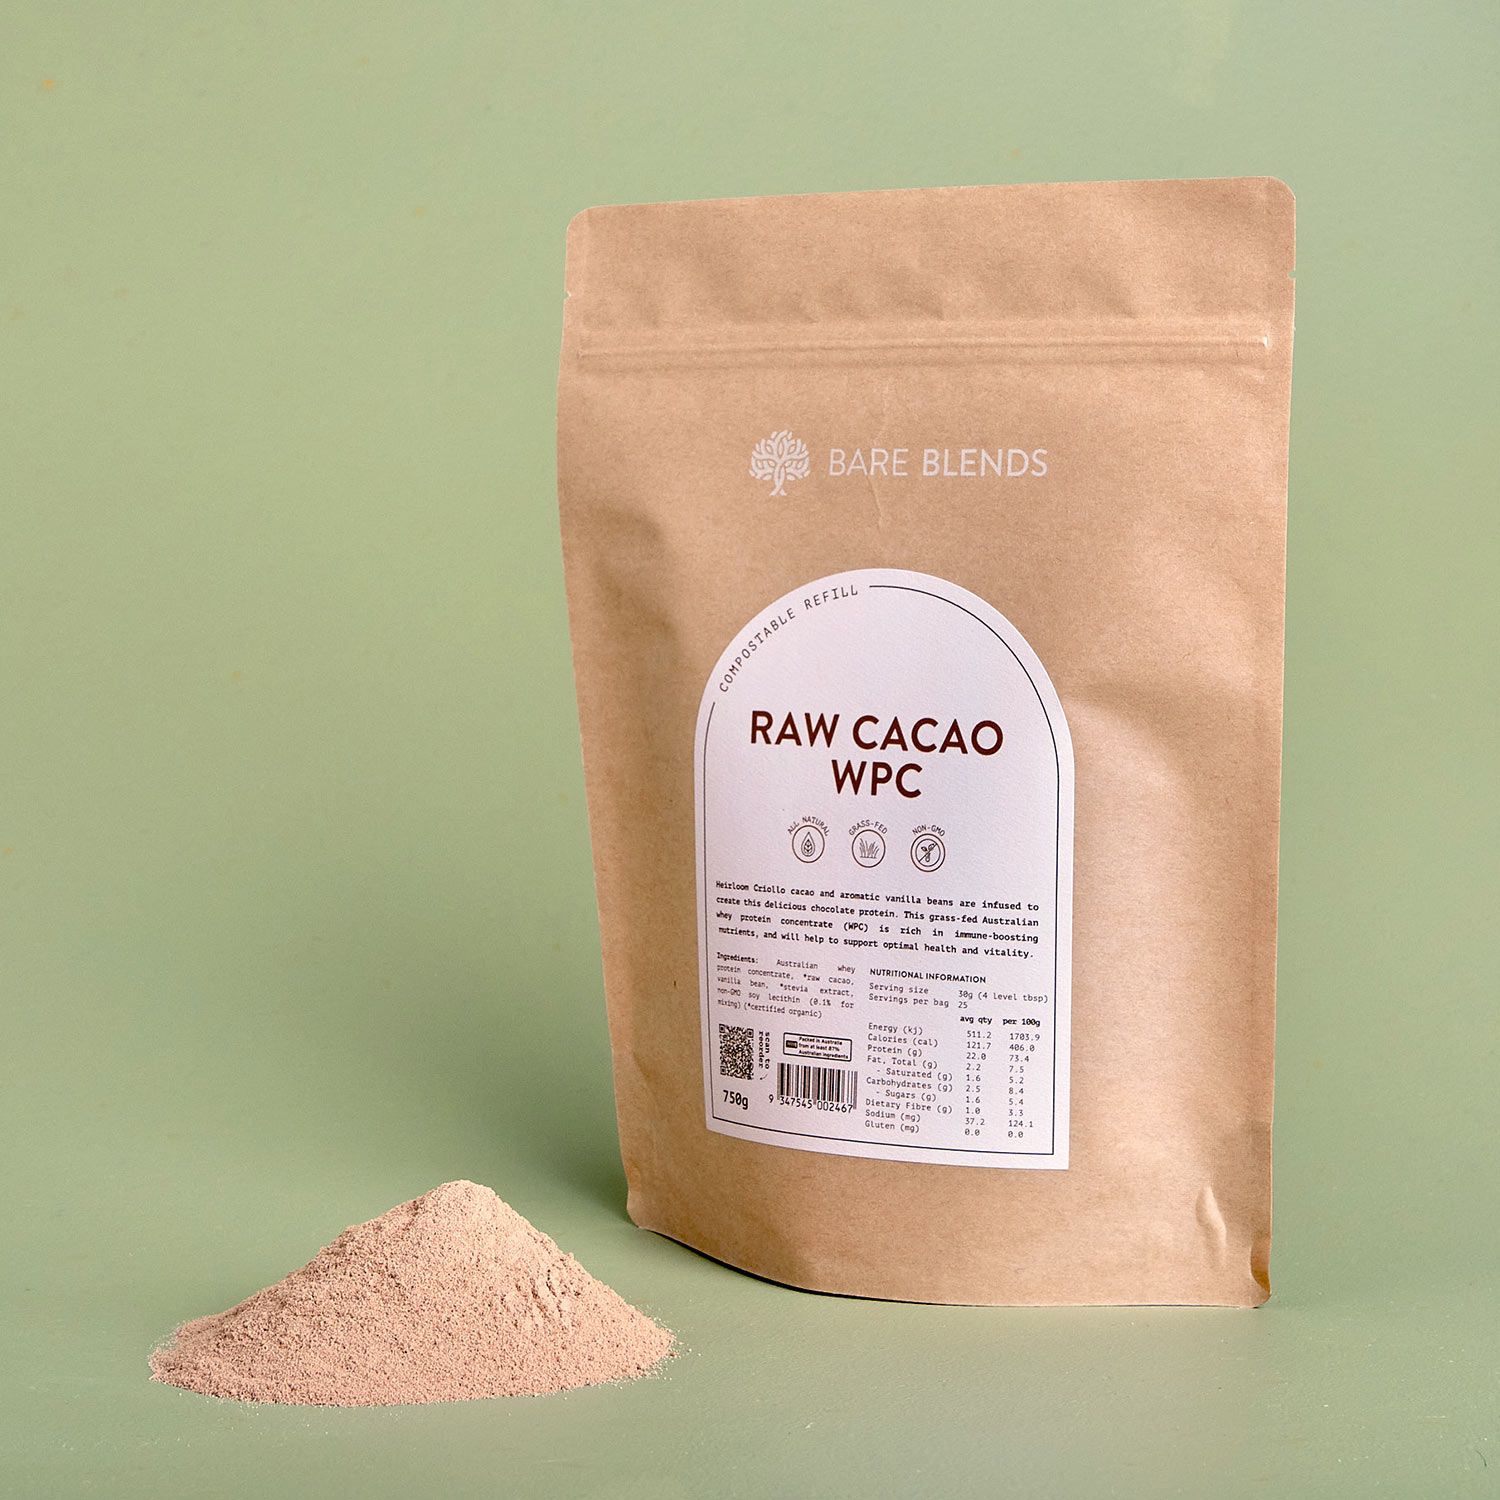 Raw Cacao WPC powder